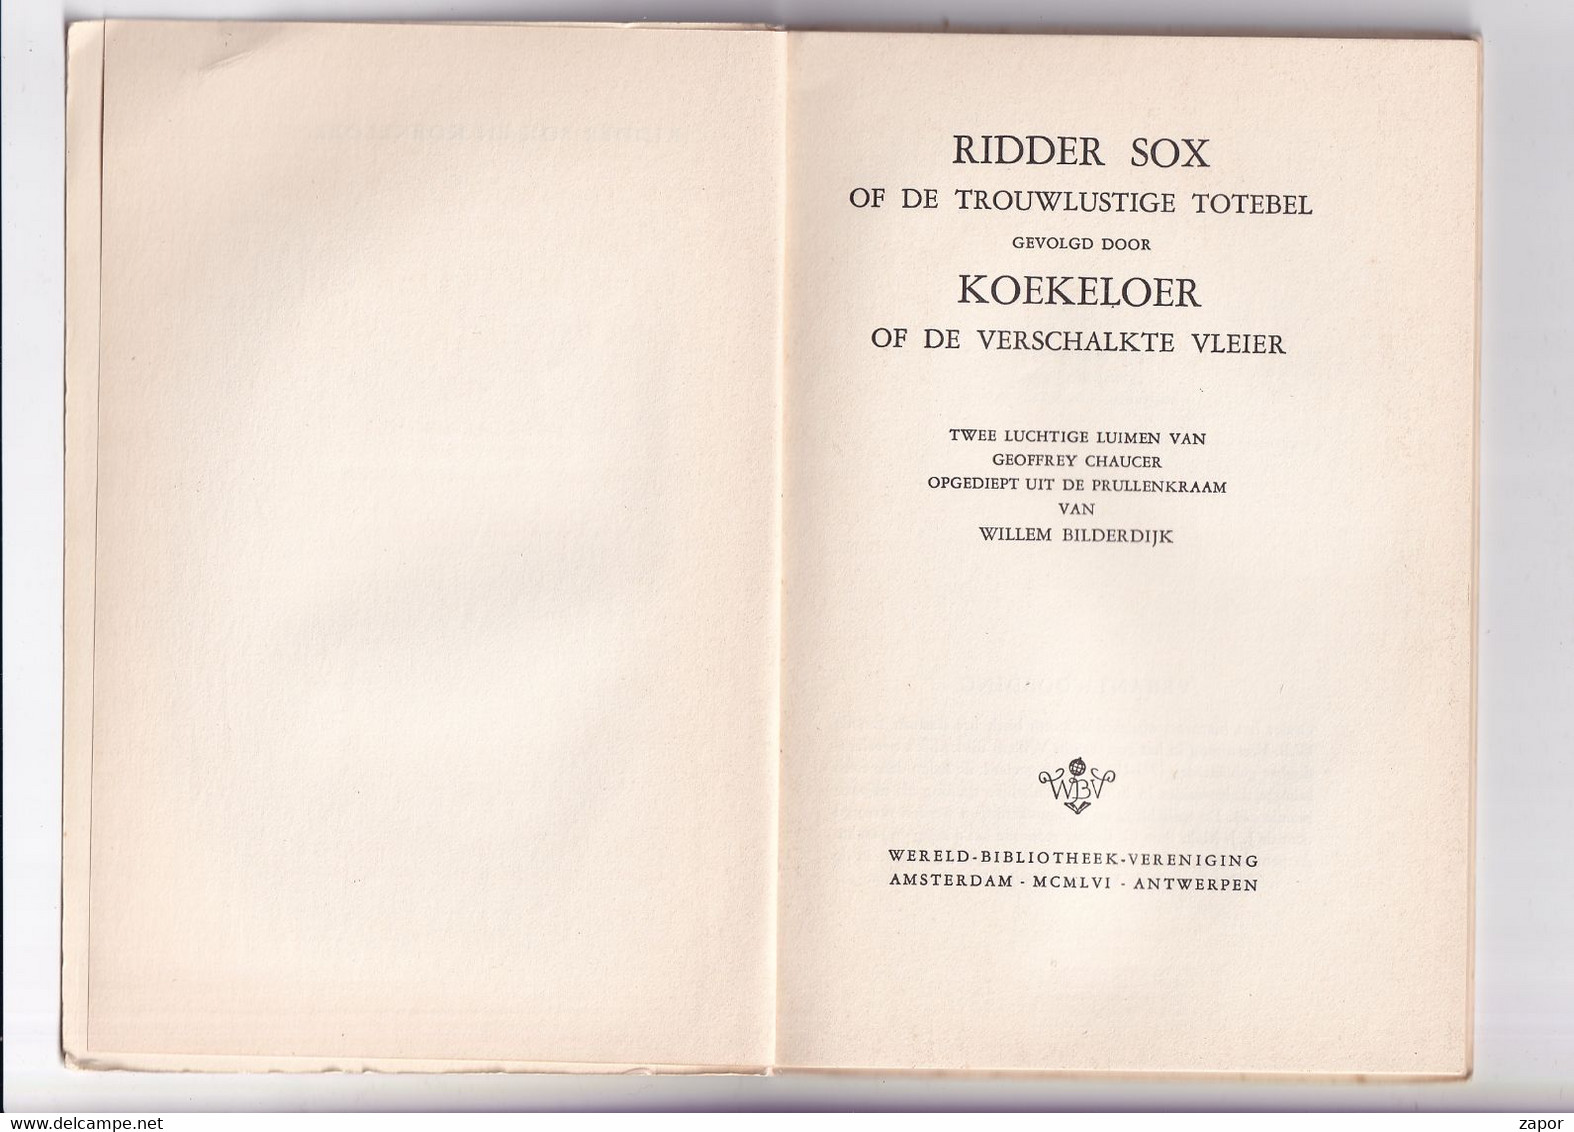 Ridder Sox En De Koekeloer - Geoffrey Chaucer - Willem Bilderdijk - Literature